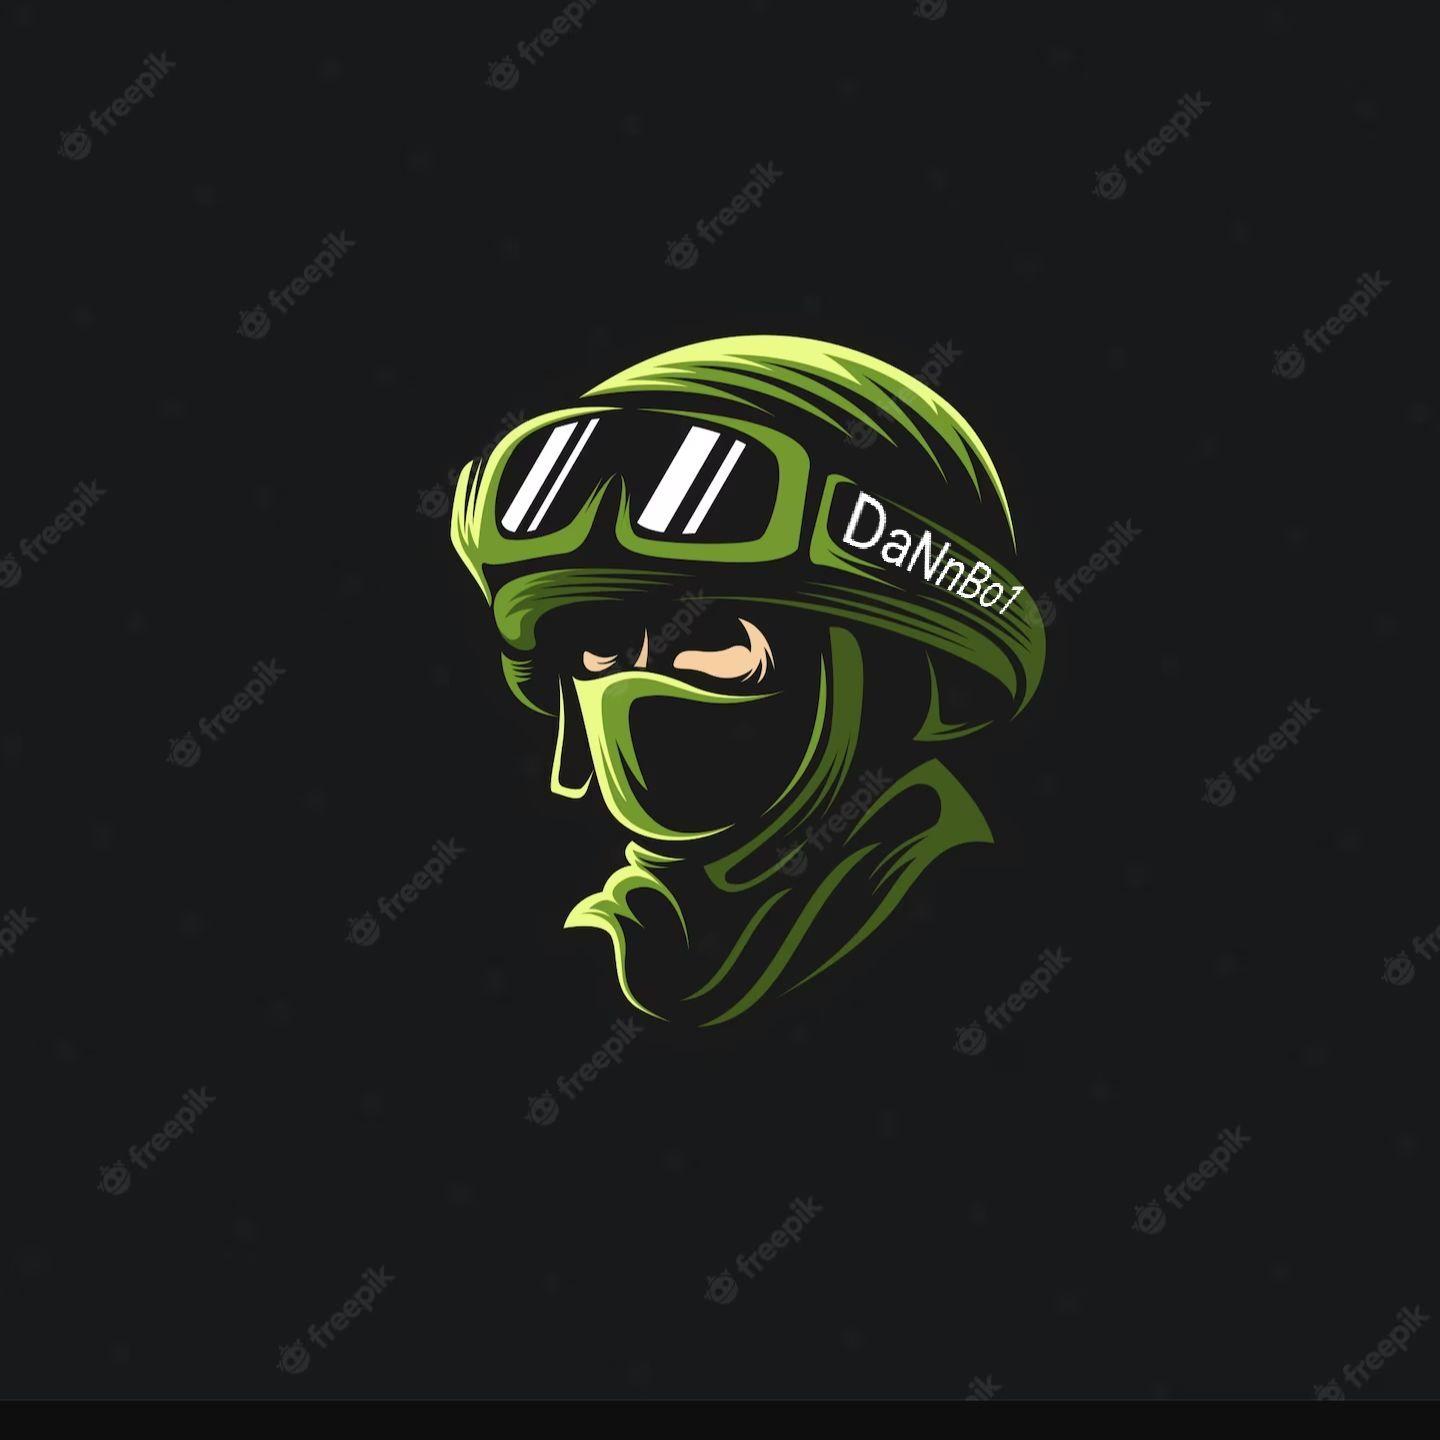 Player DaNnBo1 avatar